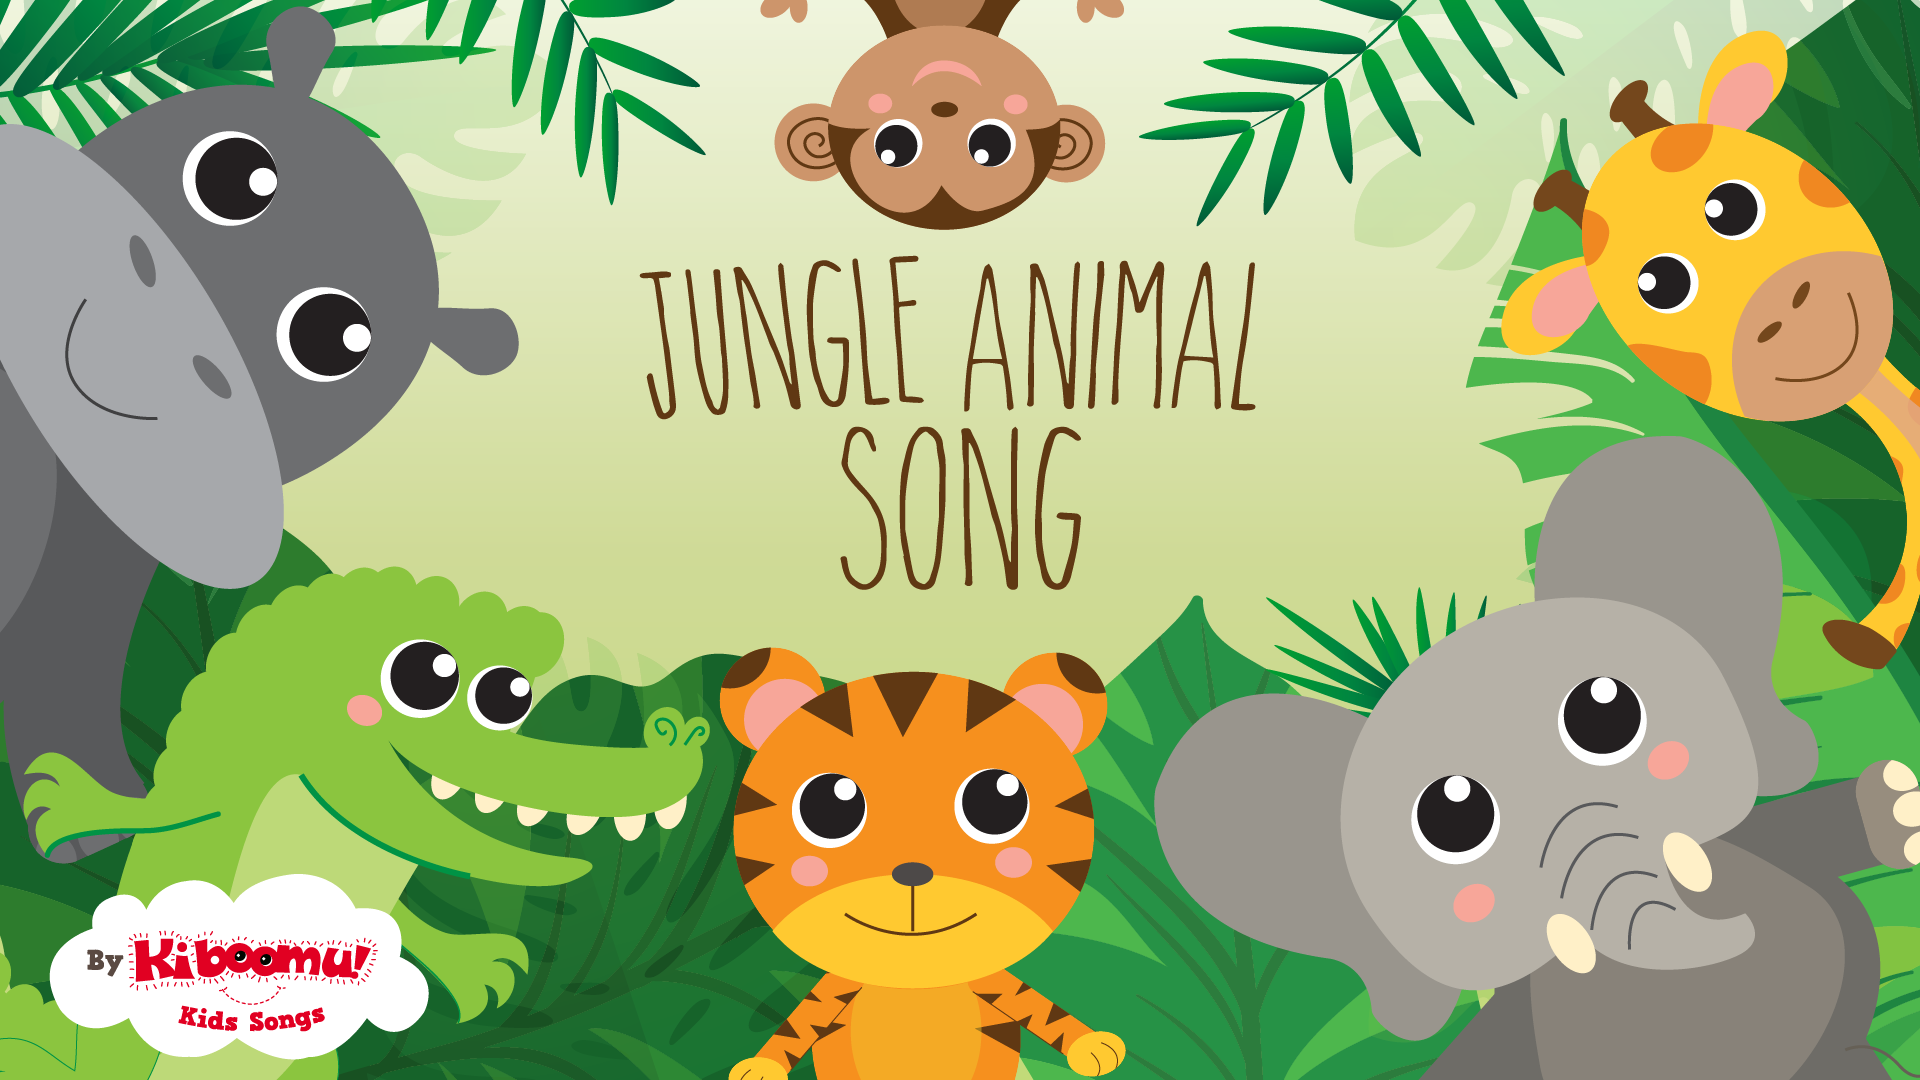 Jungle Animal Song on Behance